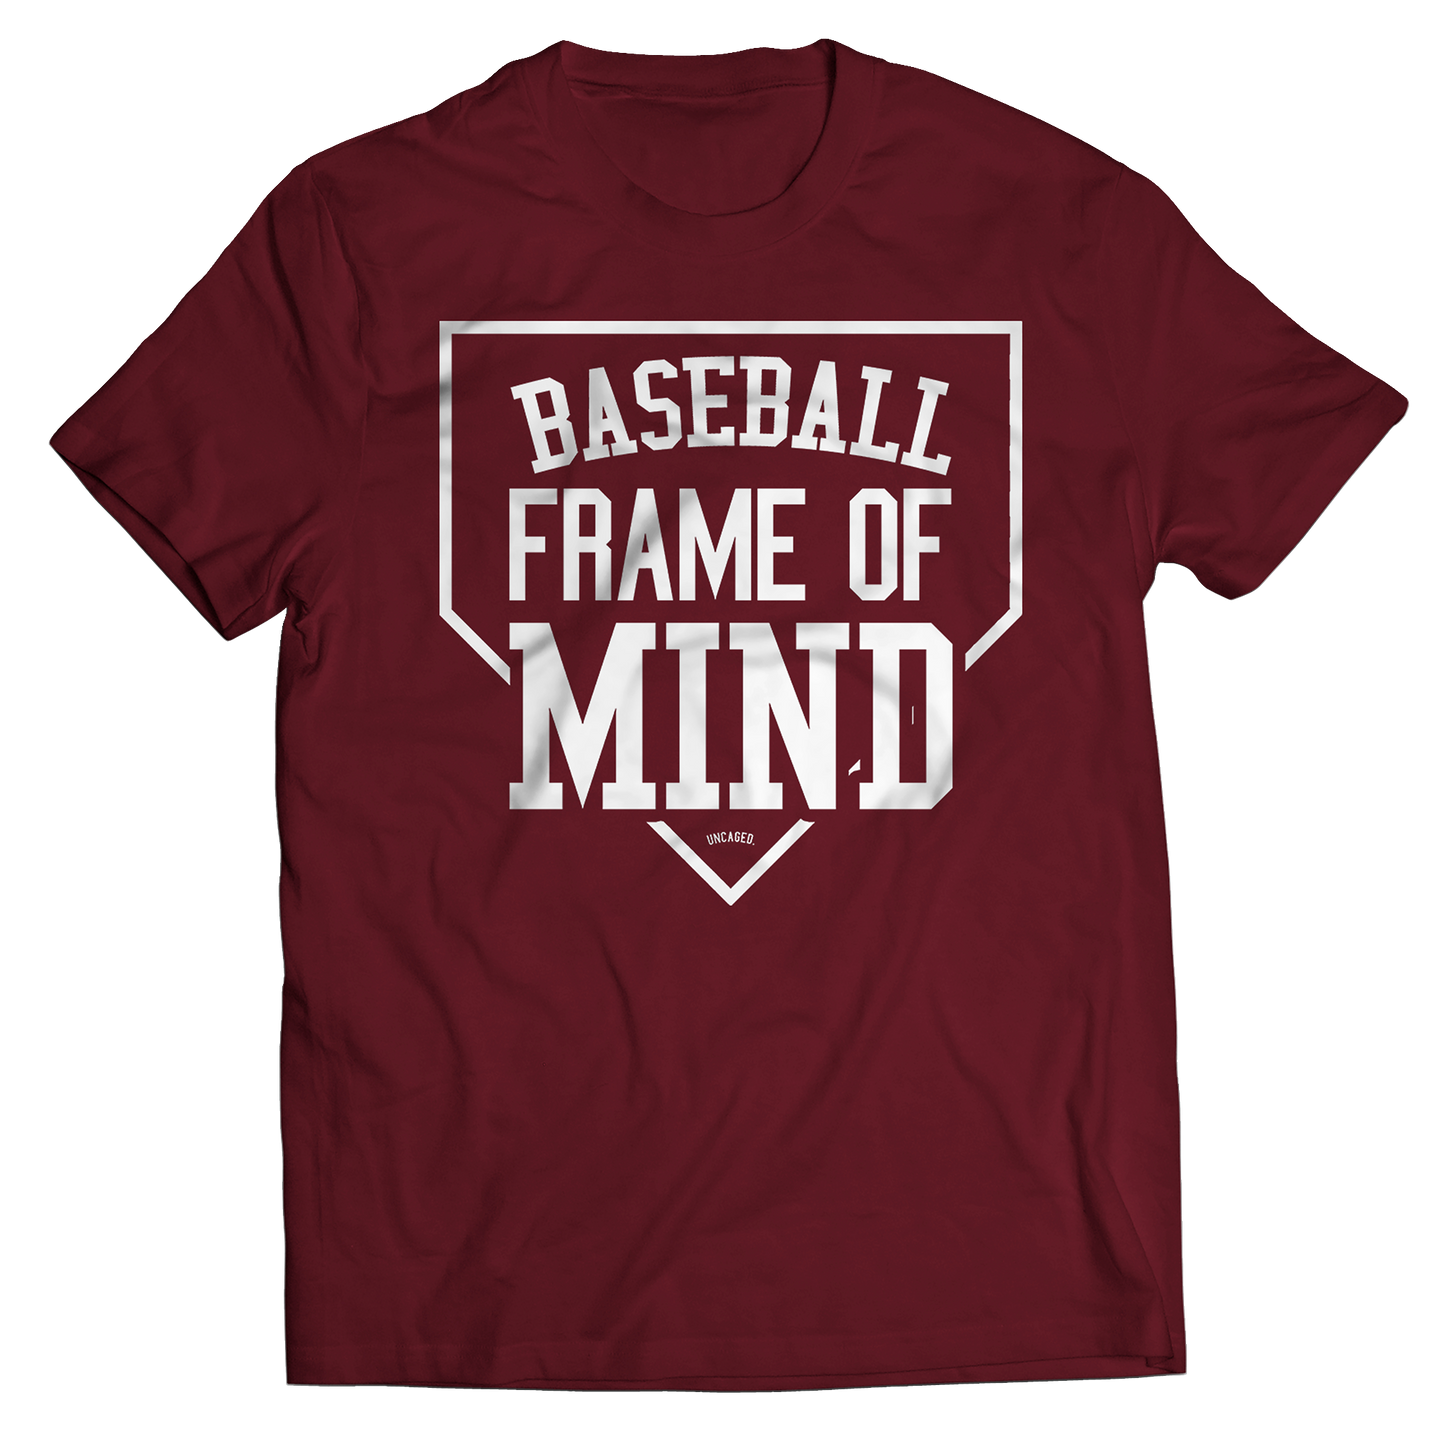 Baseball Frame of Mind T-Shirt - Maroon